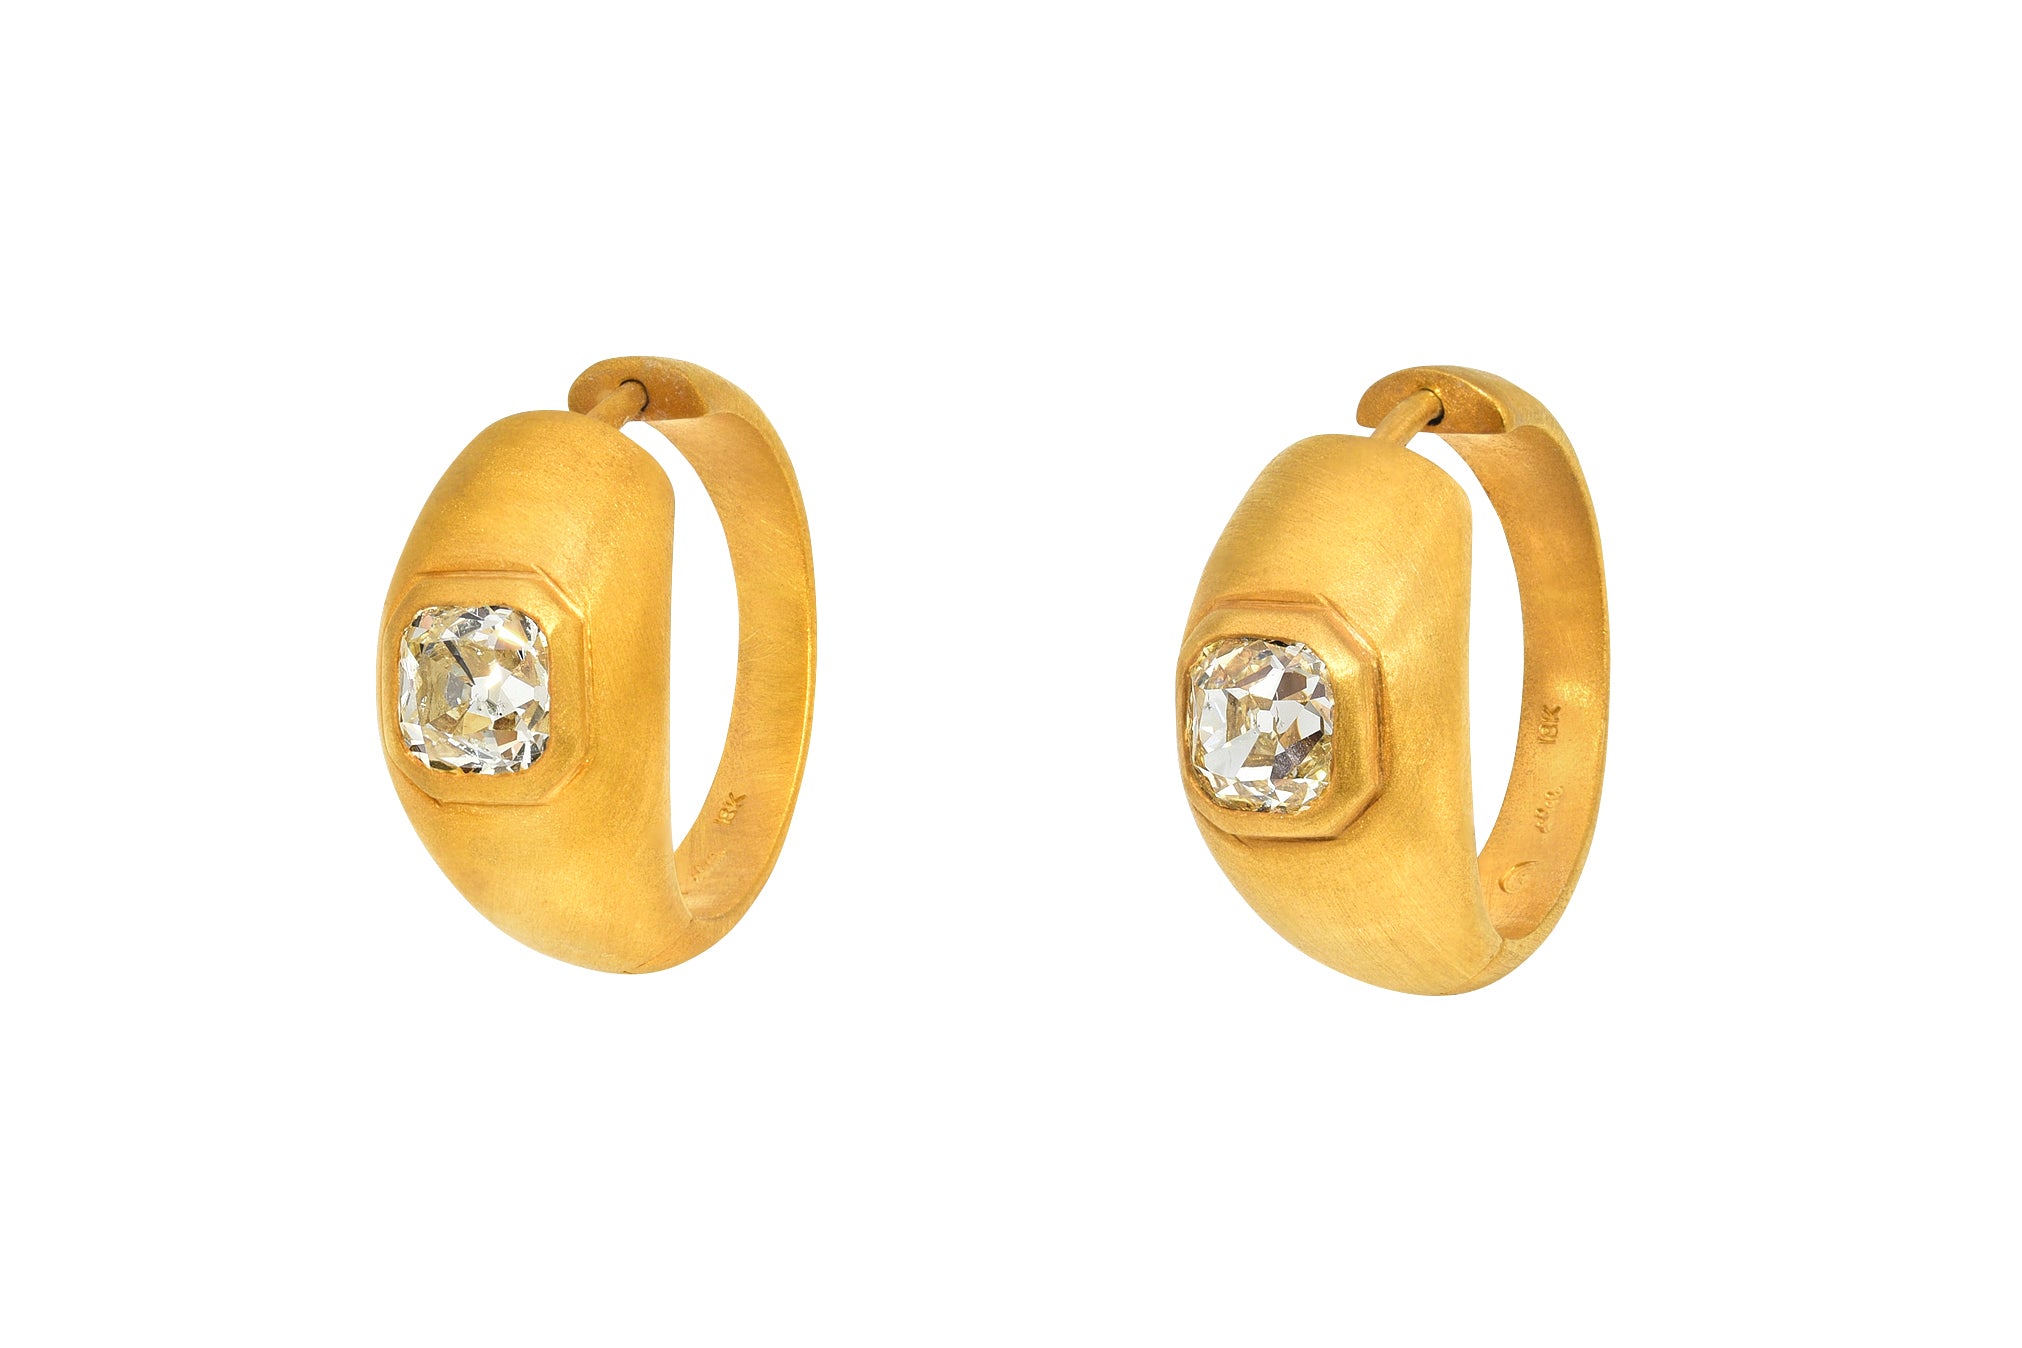 Darius Jewels one of a kind antique Peruzzi diamond ring hoops Fairmined gold 